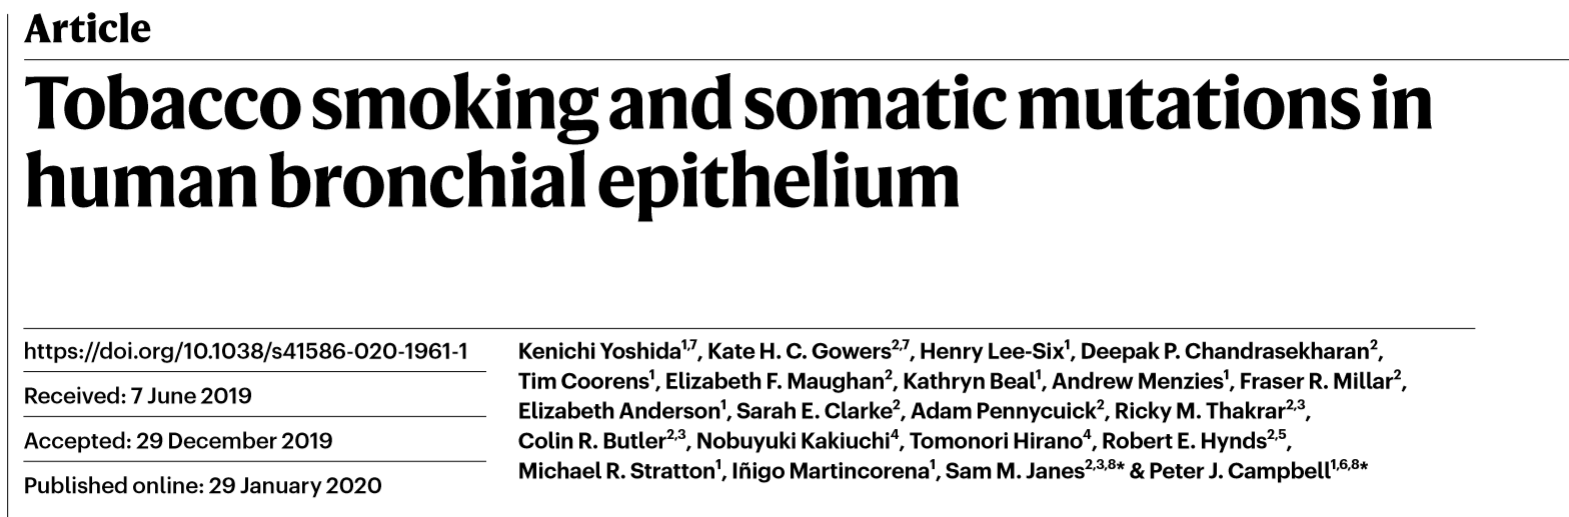 Tobacco smoking and somatic mutations in human bronchial epithelium